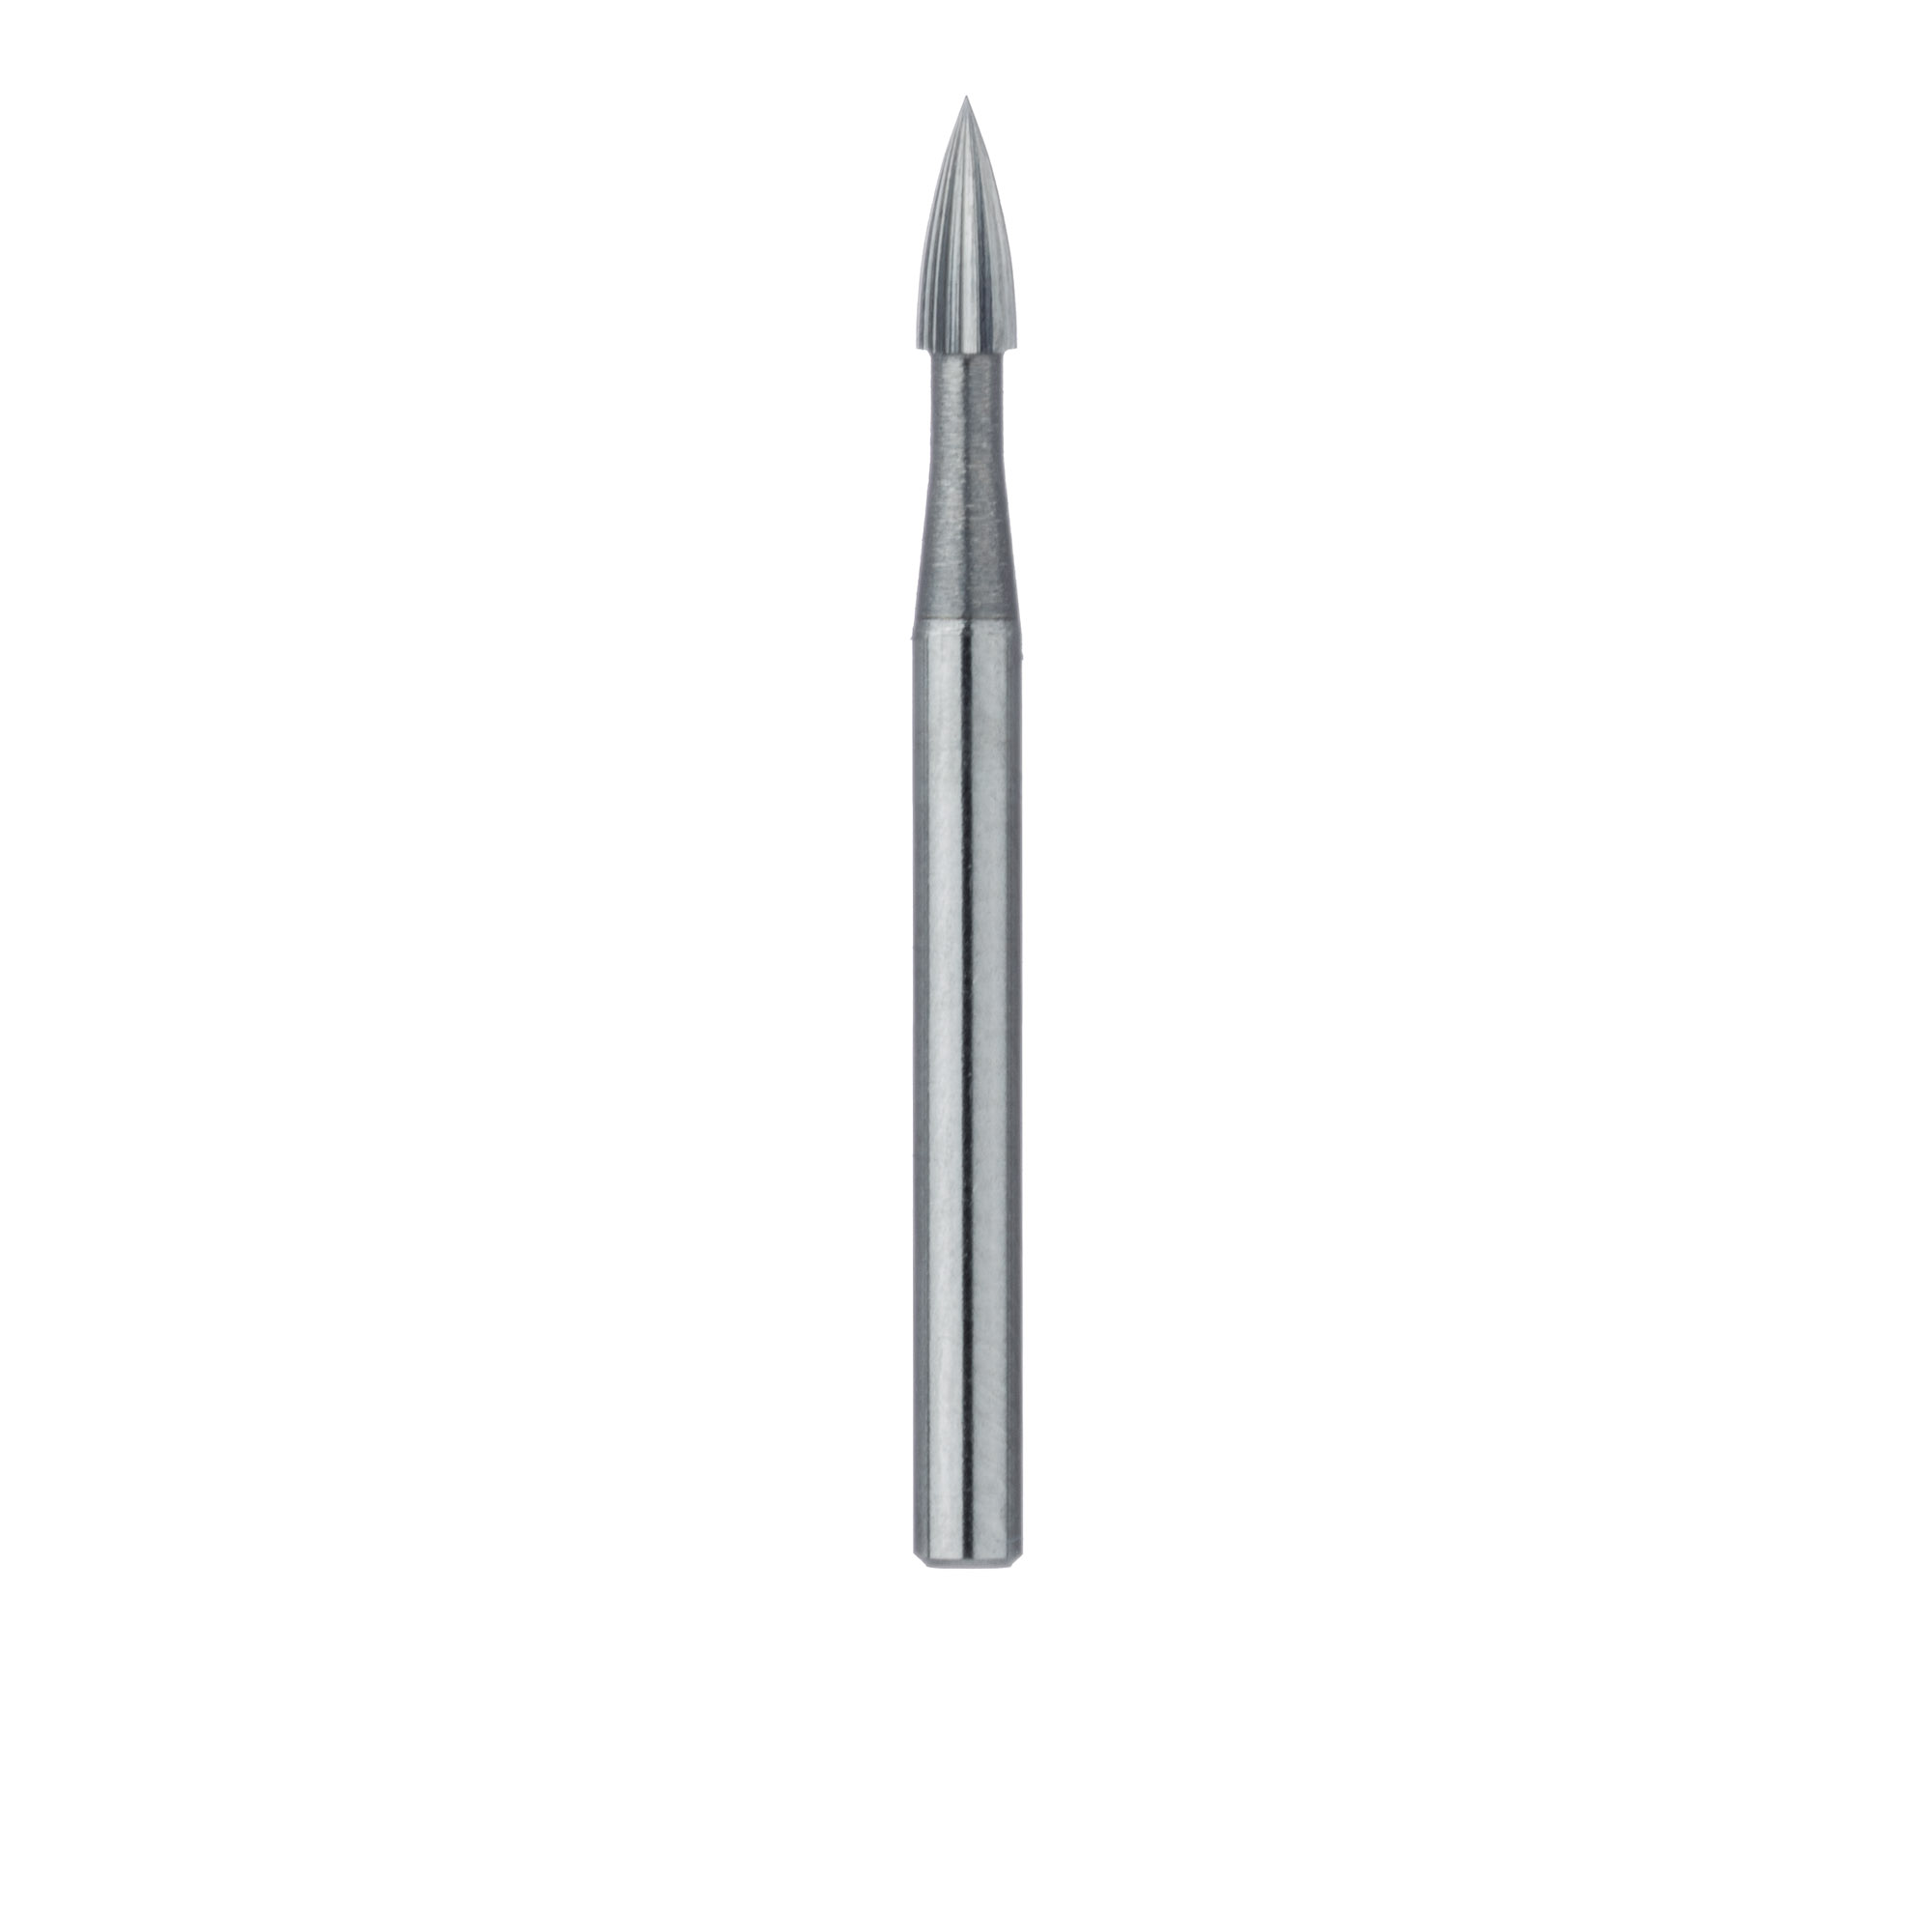 HM246-014-FG Trimming & Finishing Carbide Bur, Fine, Small Flame, US#7904, 1.4mm Ø, FG